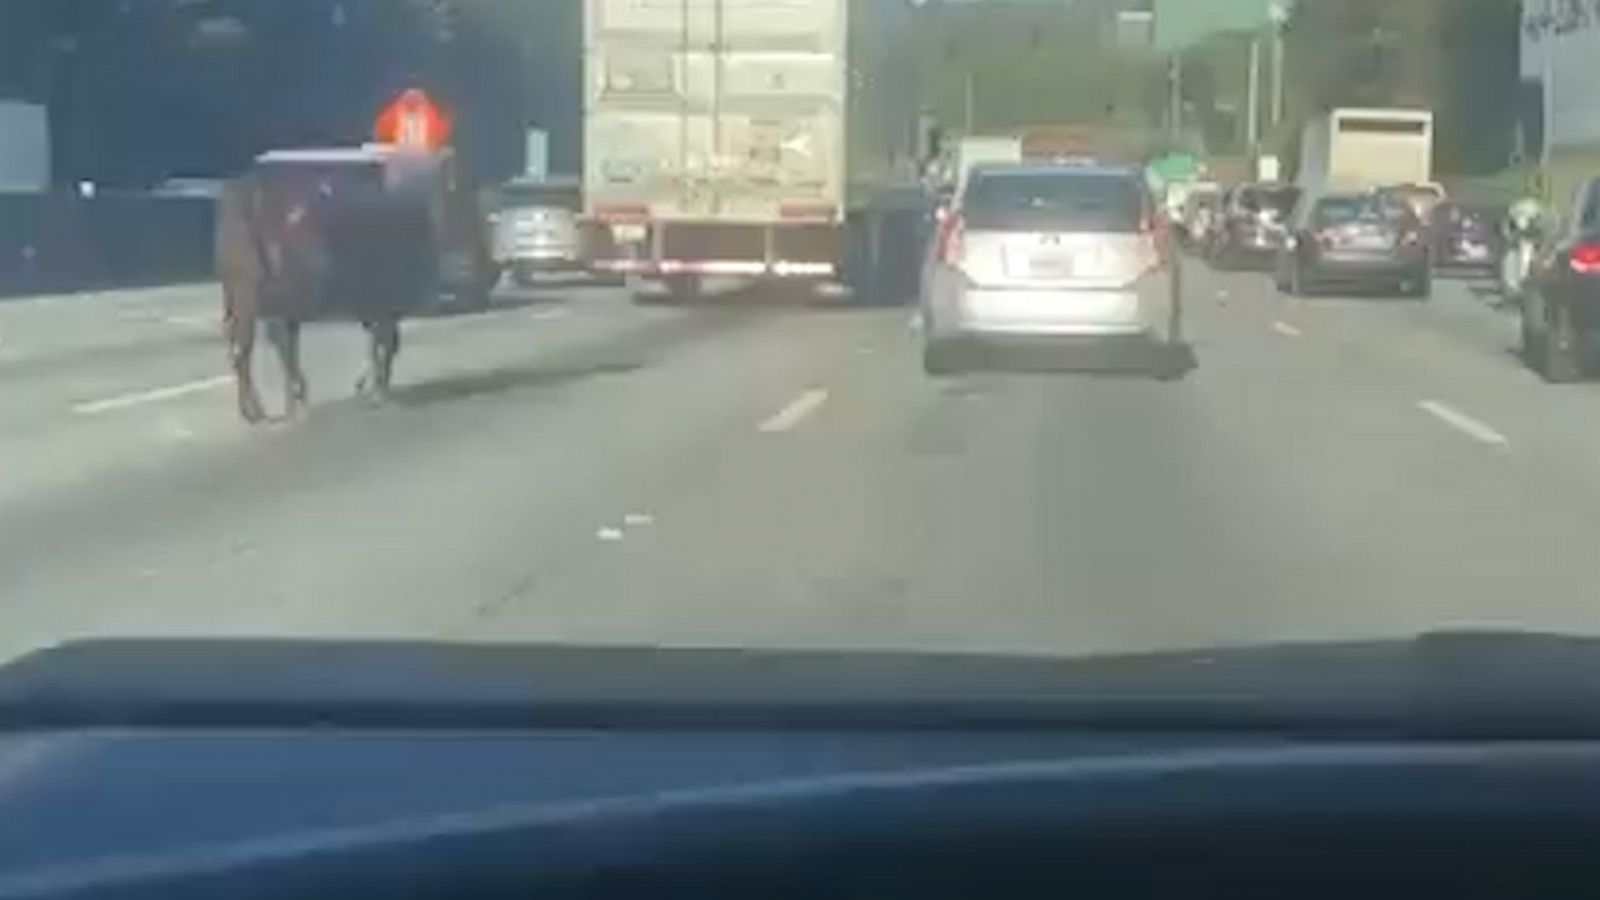 Cow halts traffic on interstate - Good Morning America